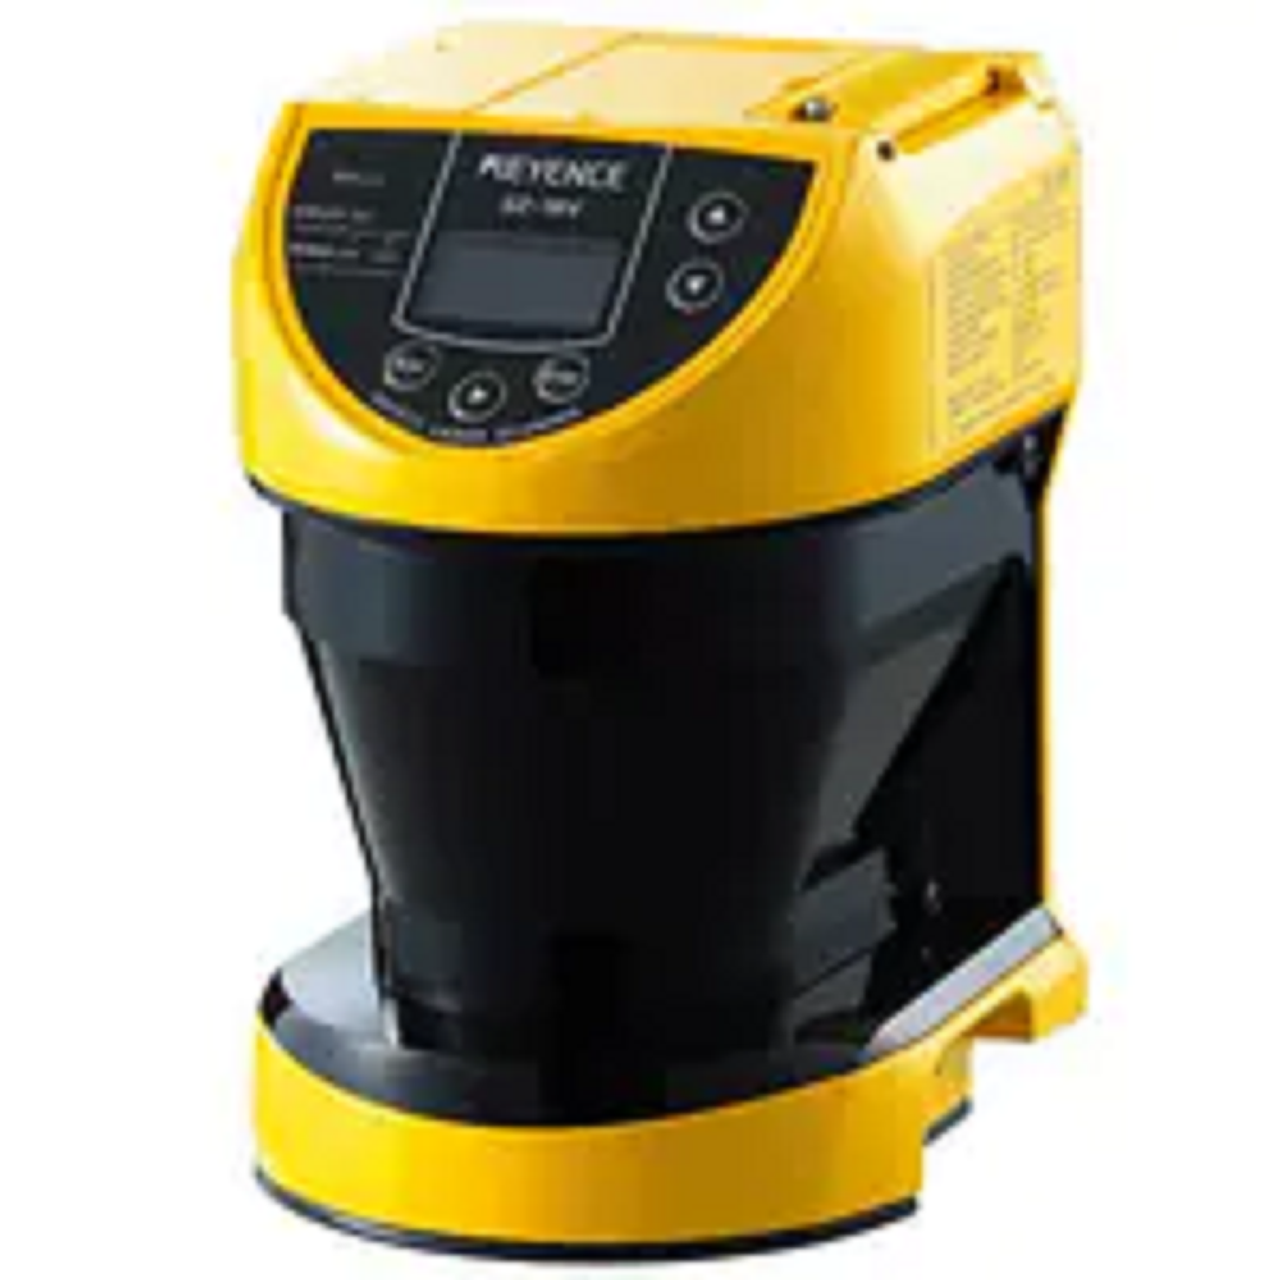 Keyence SZ-16V Safety Laser Scanner, Main Unit, Multi-Bank Type [New]